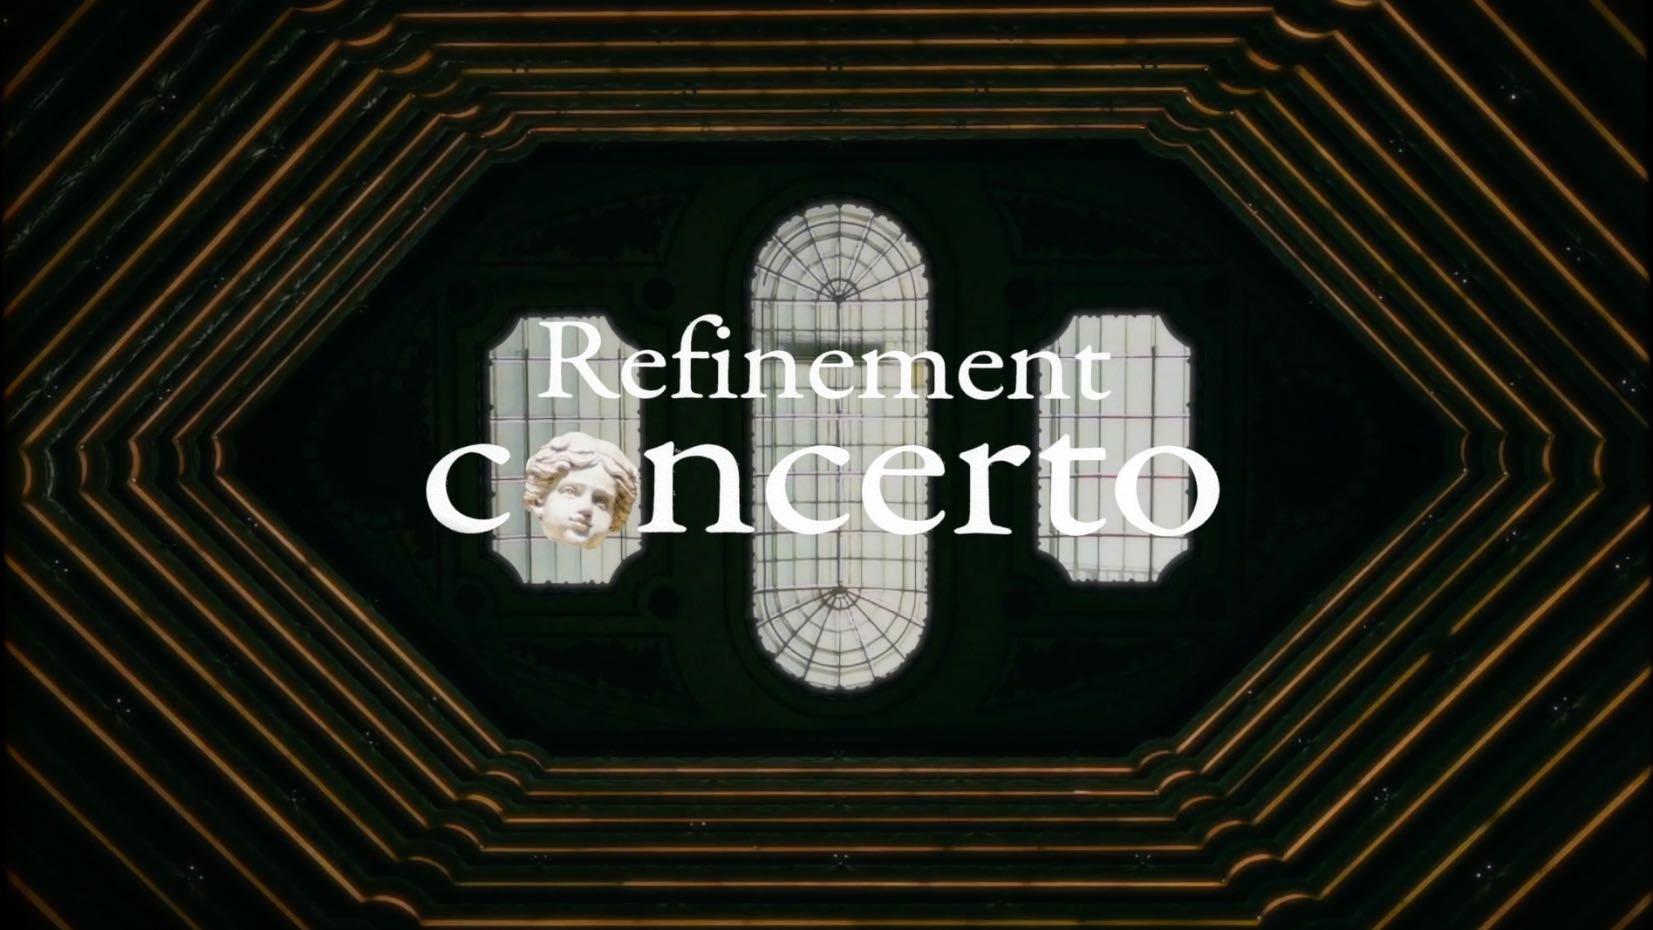 VOGUEme - Refinement Concerto